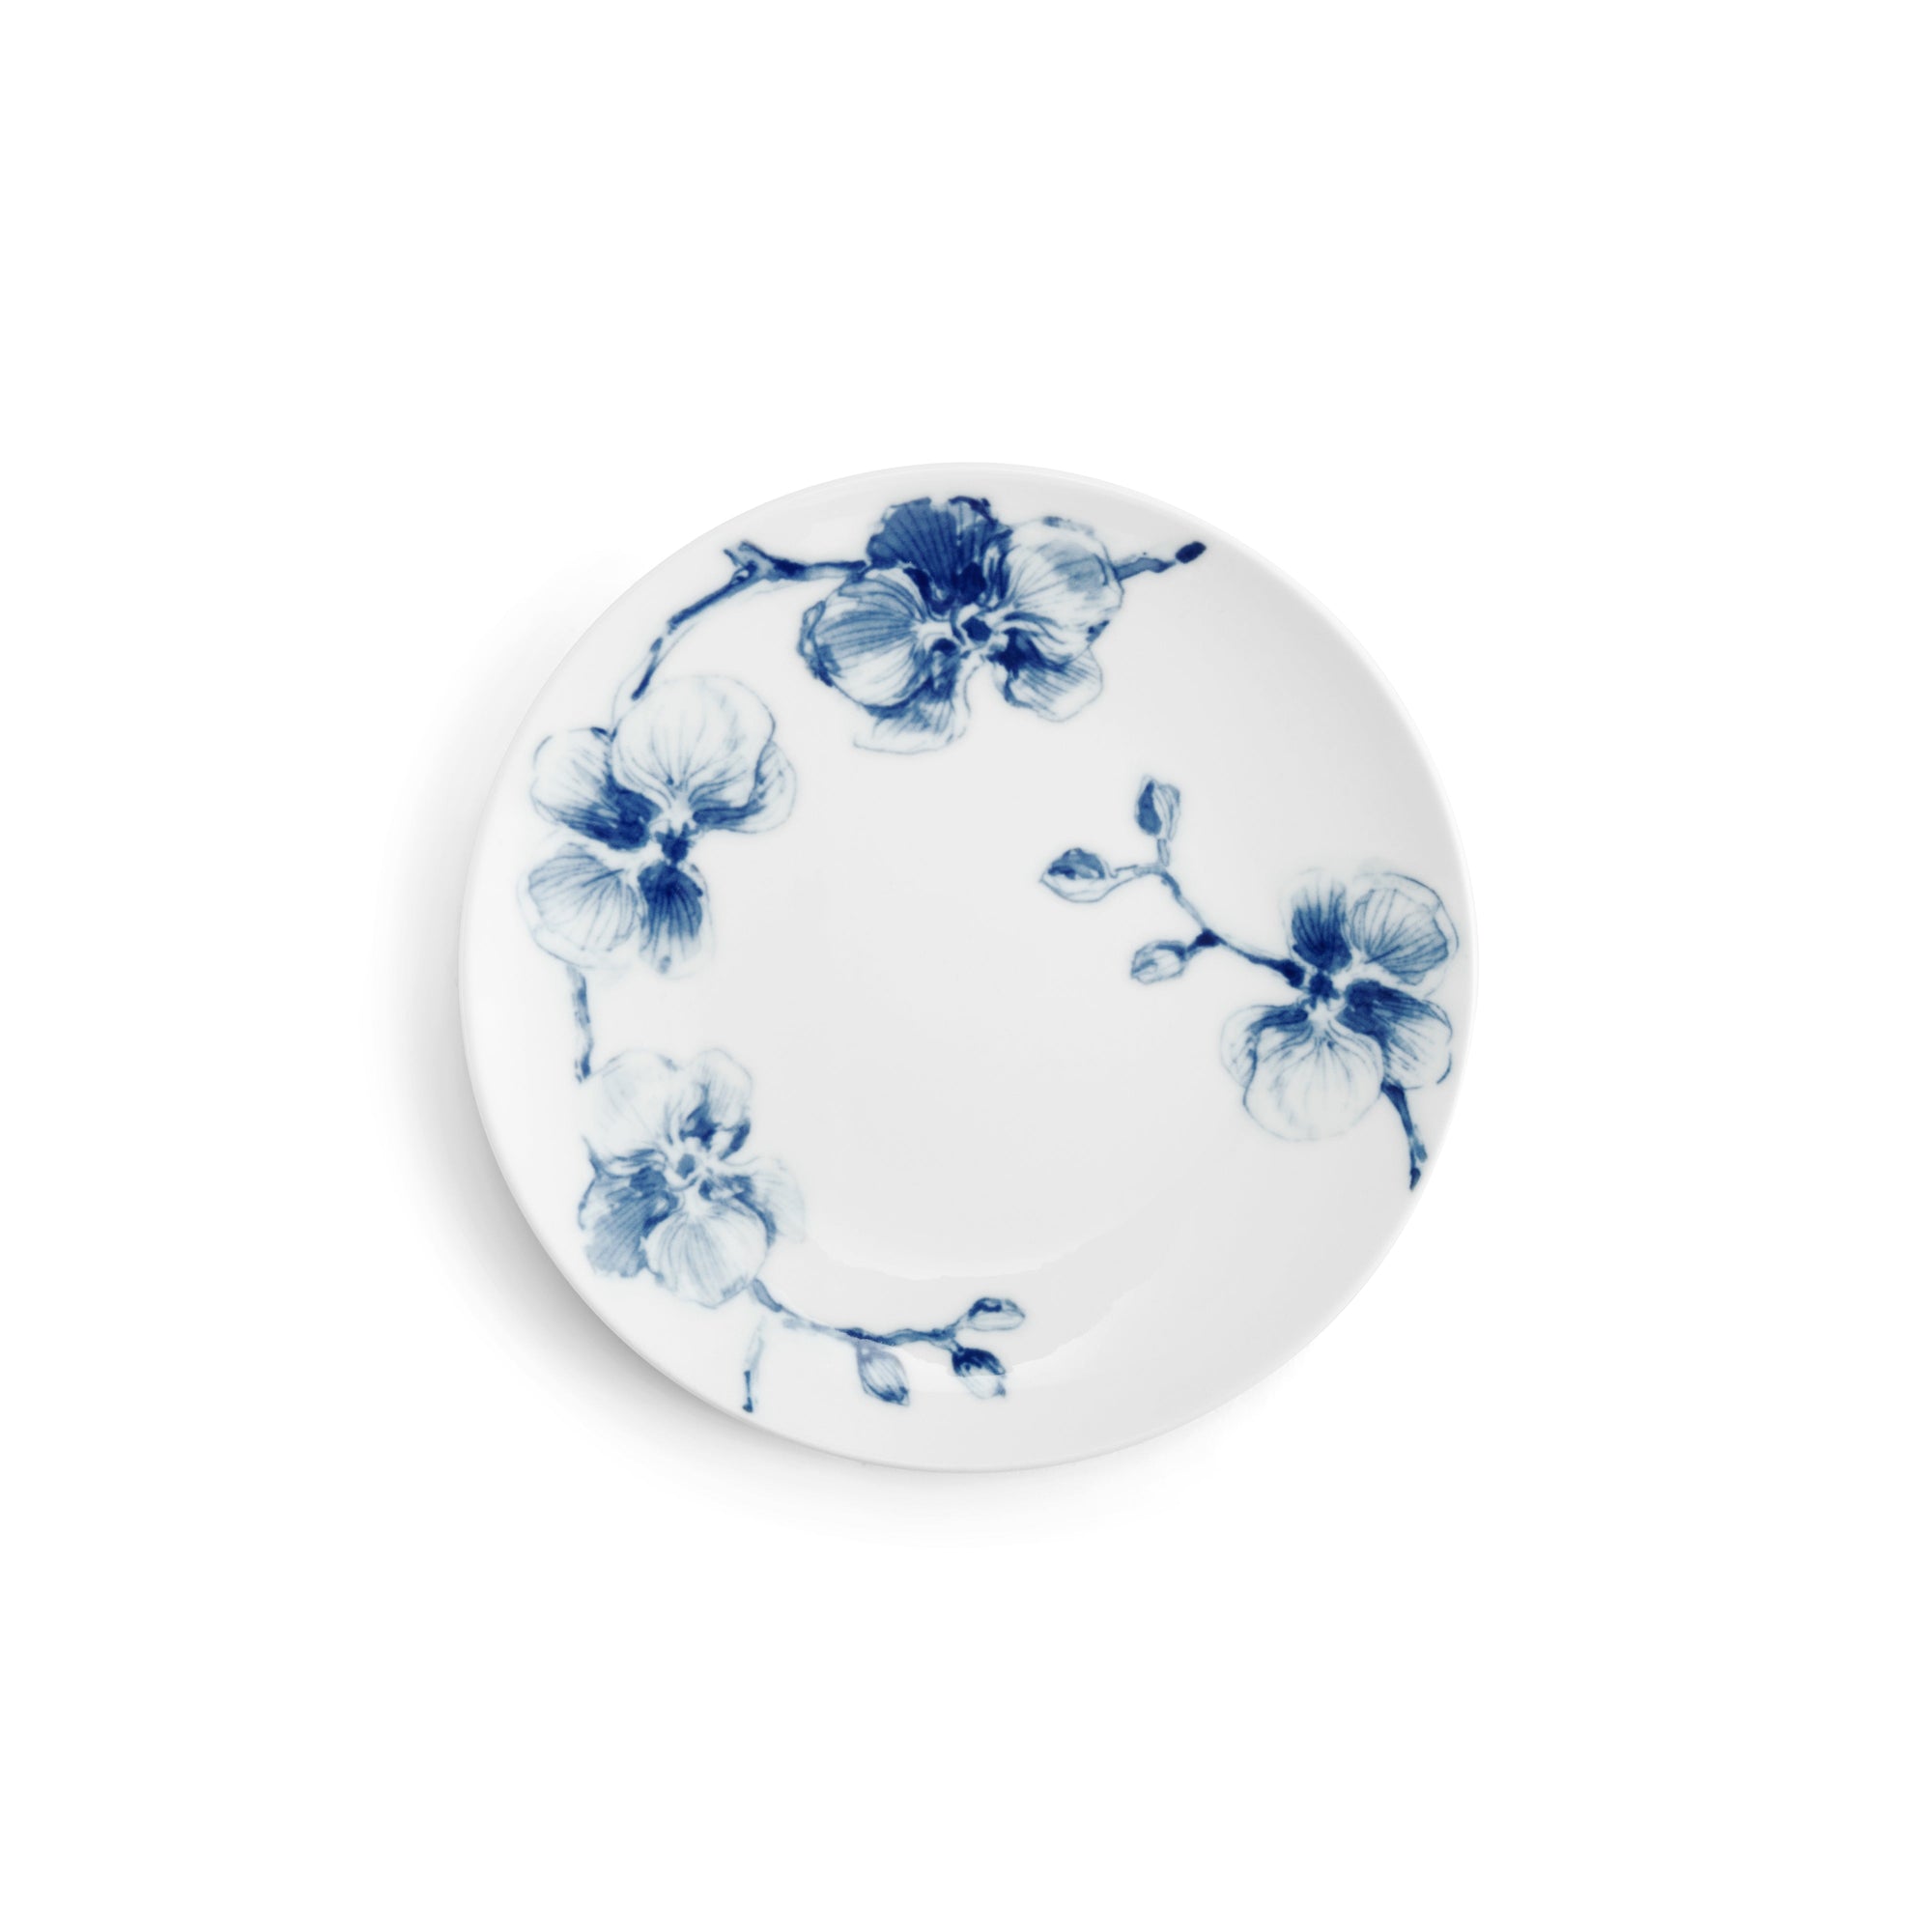 Michael Aram Blue Orchid Tidbit Plate Set